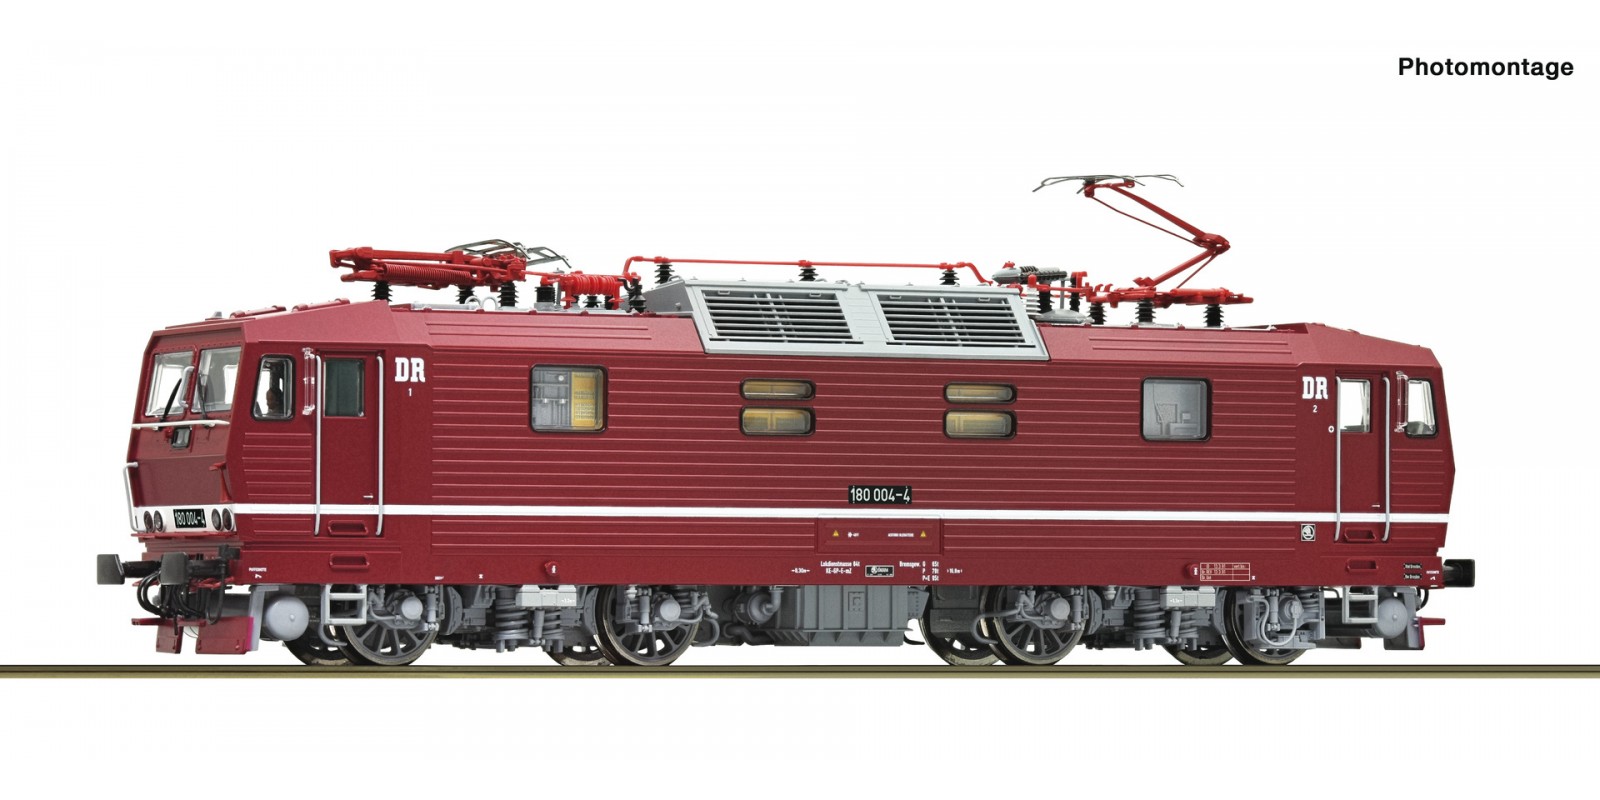 RO7510052 Electric locomotive 180 0 04-4, DR                 